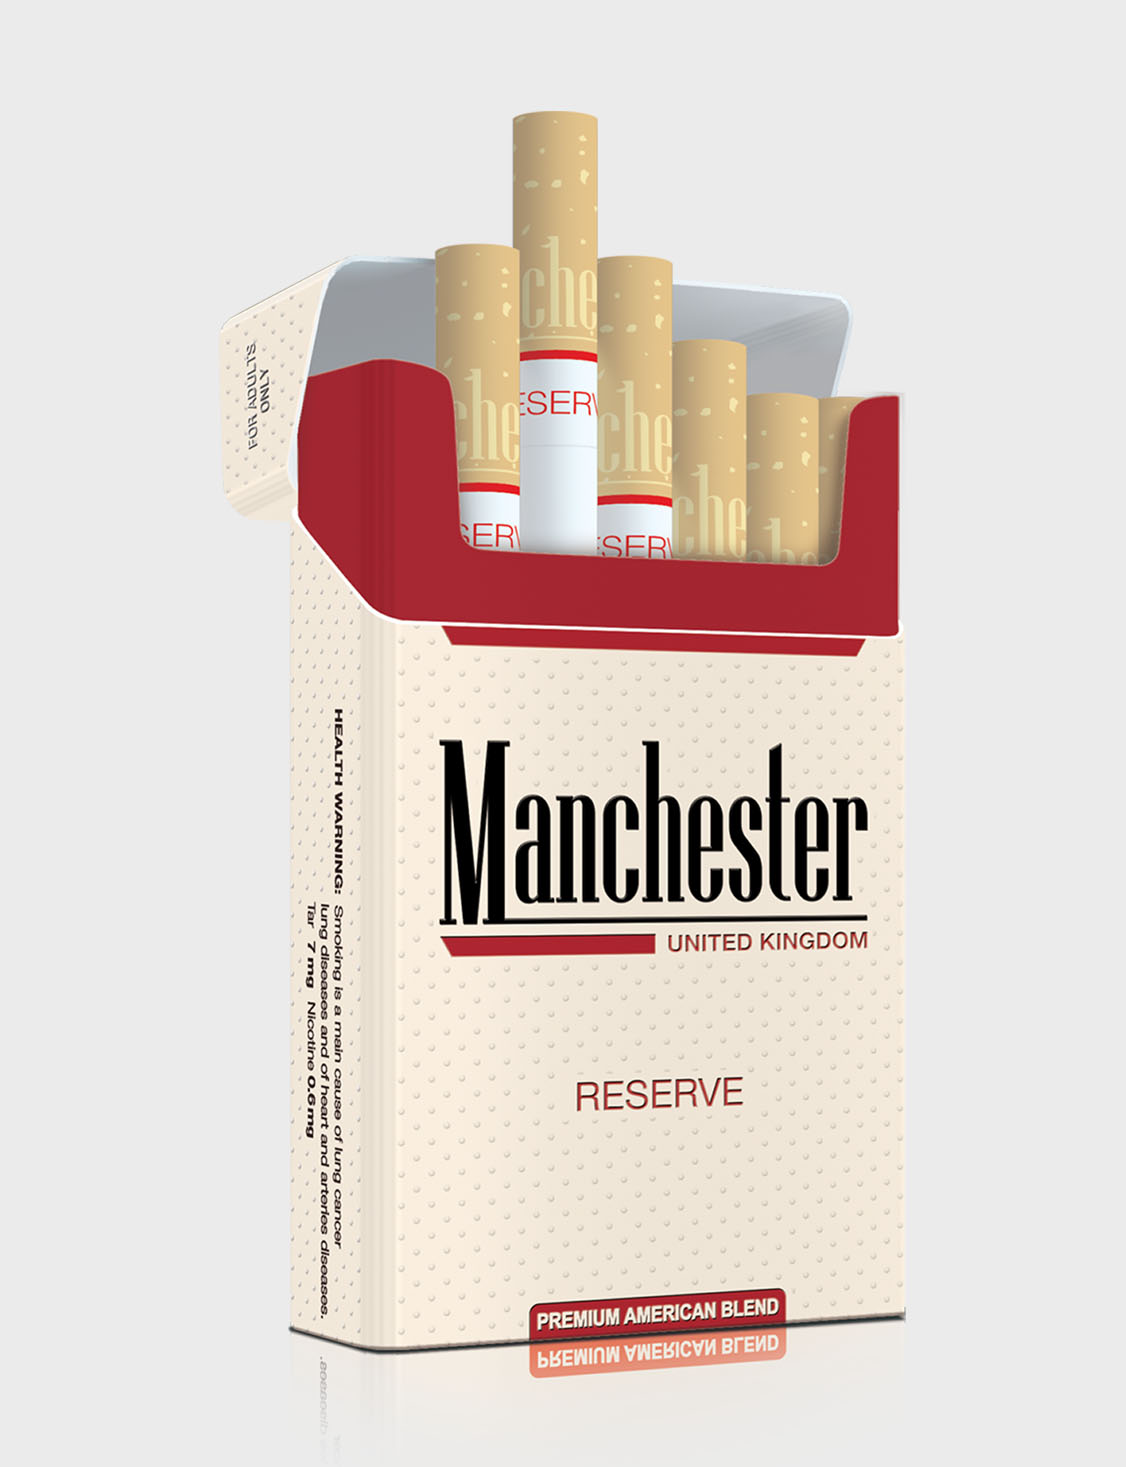 Манчестер компакт. Сигареты Manchester United Kingdom. Манчестер Квин Блю сигареты. Сигареты Манчестер компакт. Сигареты Манчестер Руби компакт.